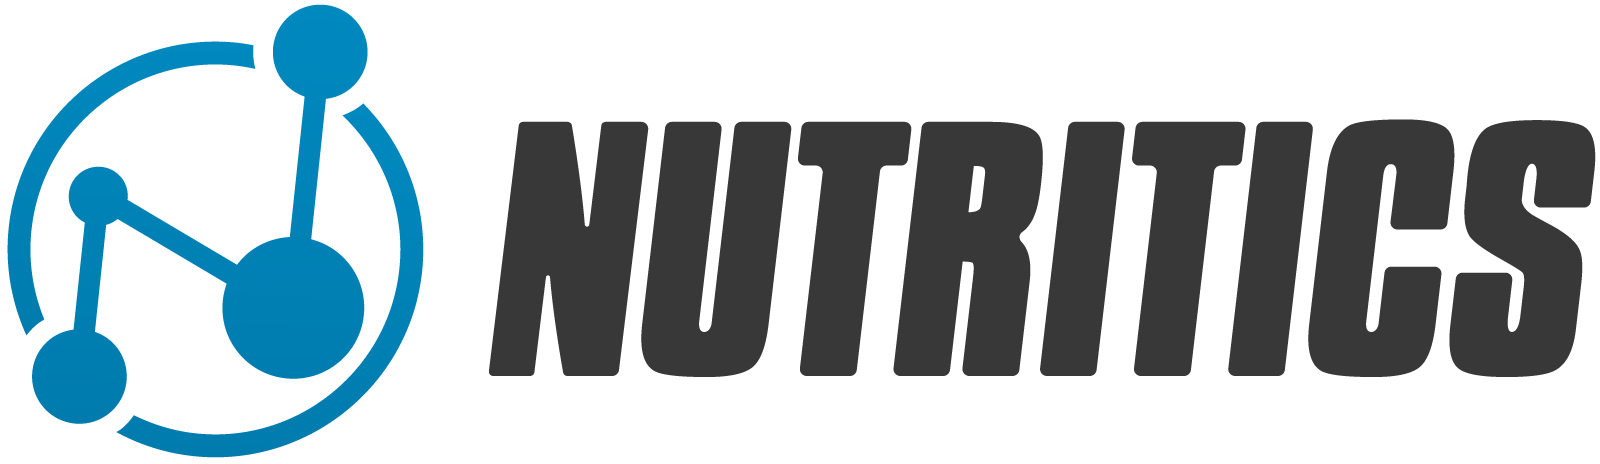 Nutritics logo on light